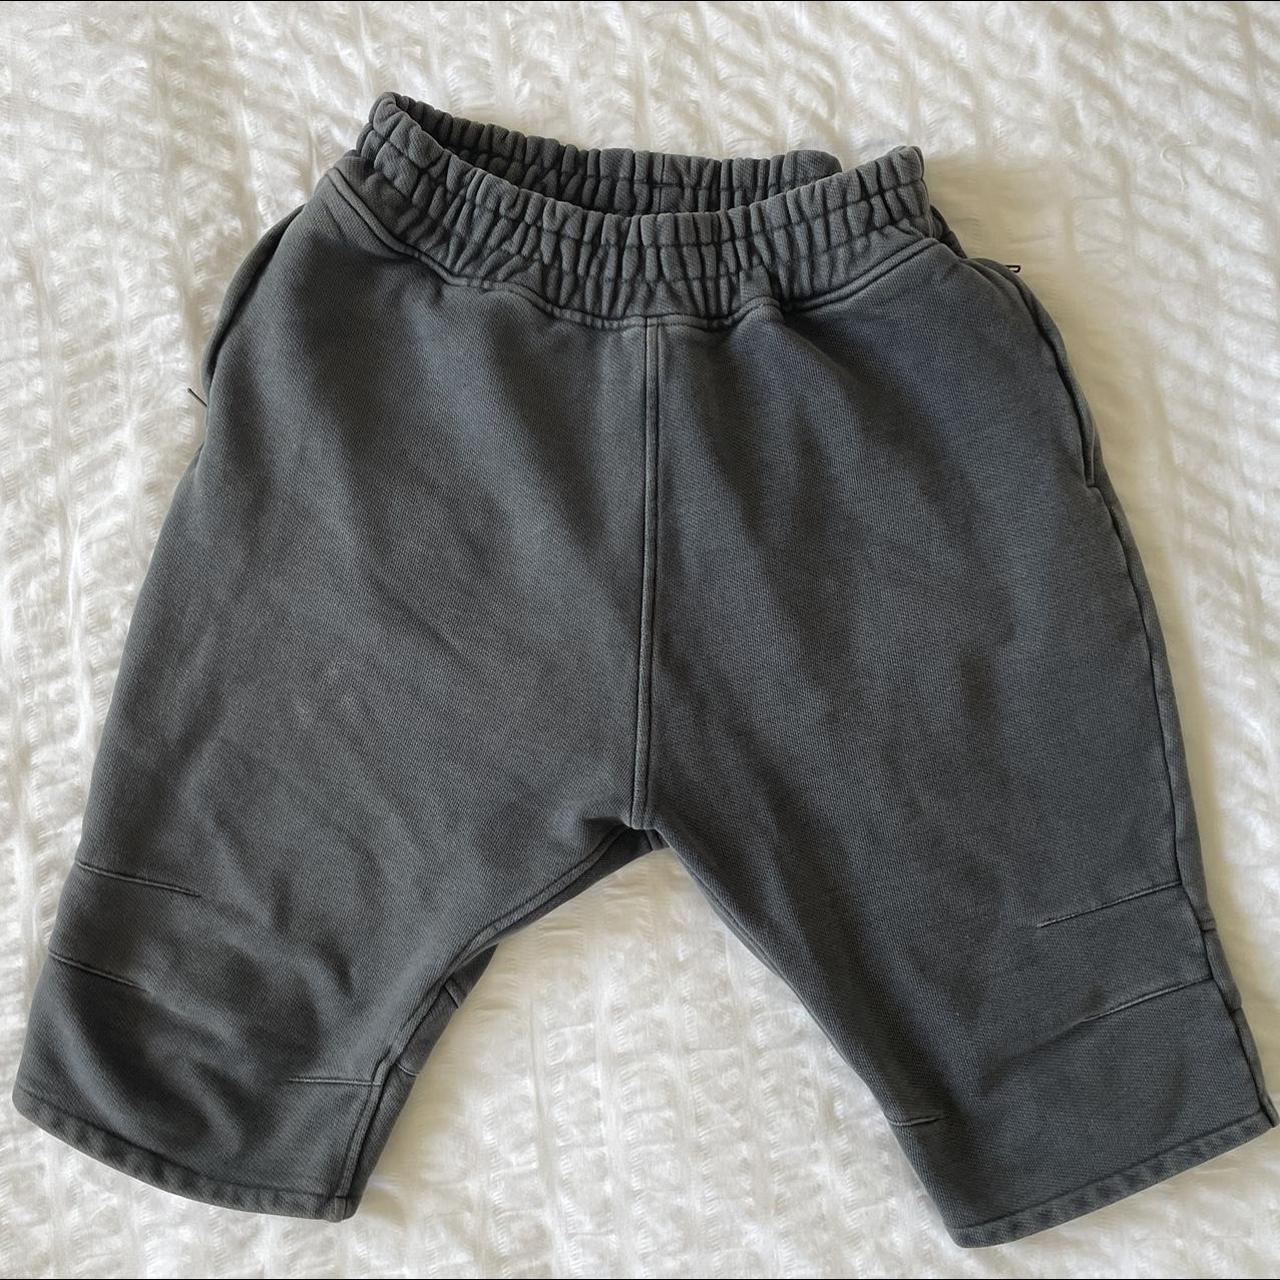 Yeezy Season 1 FJ Shorts, size S (30-32...